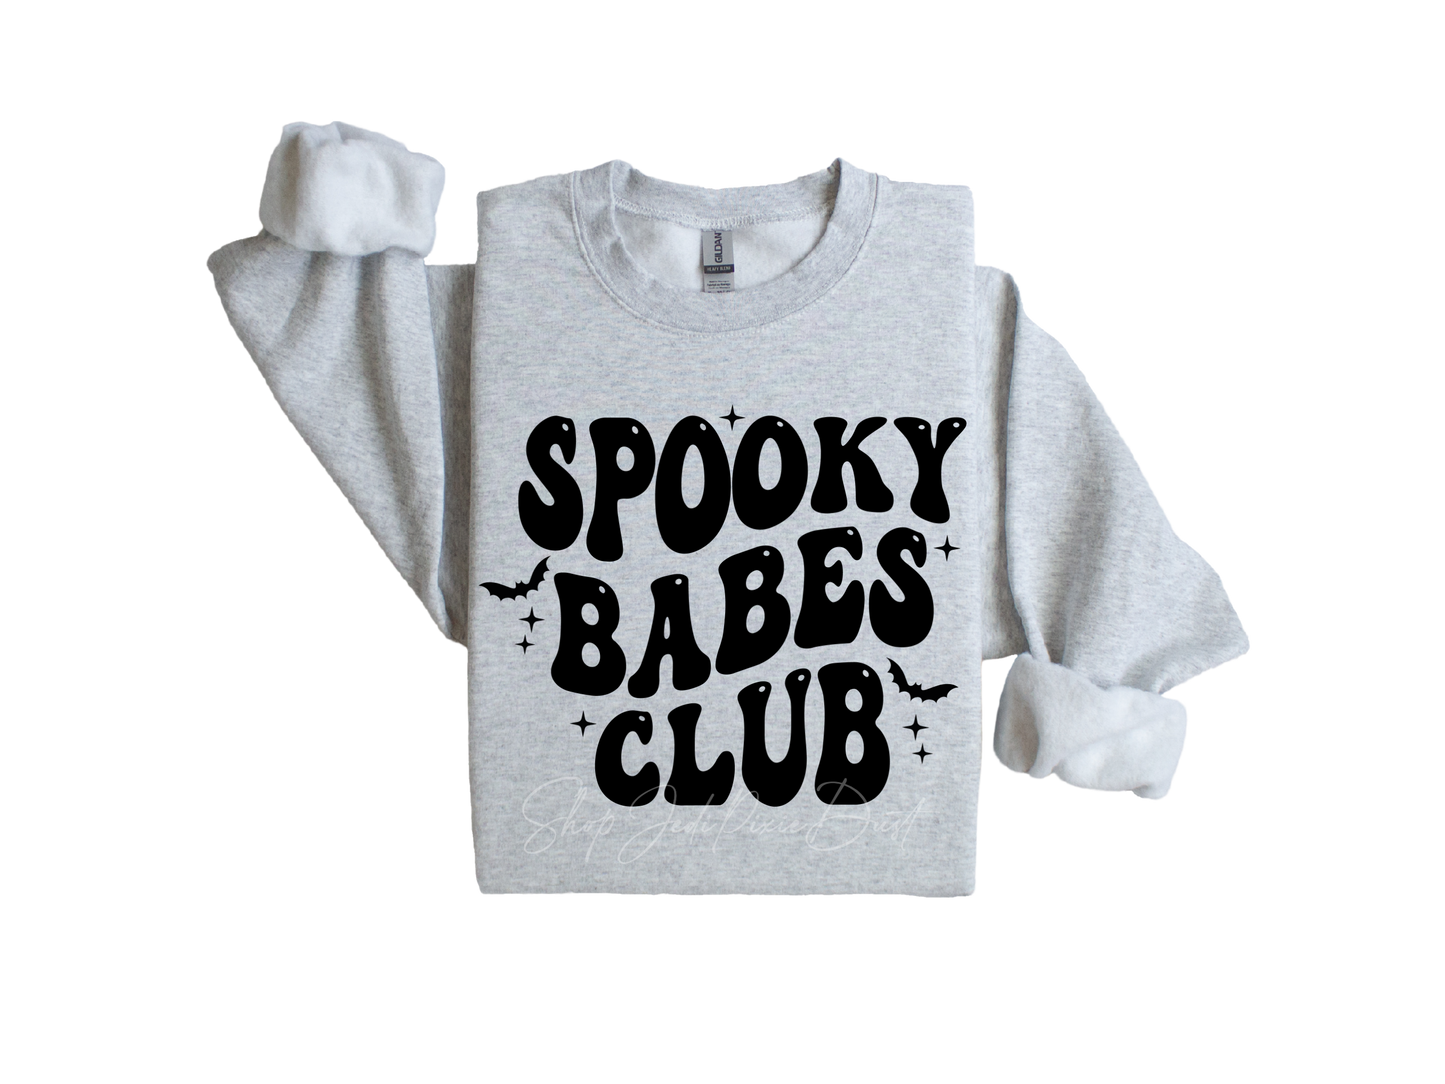 Spooky Babes Club v2